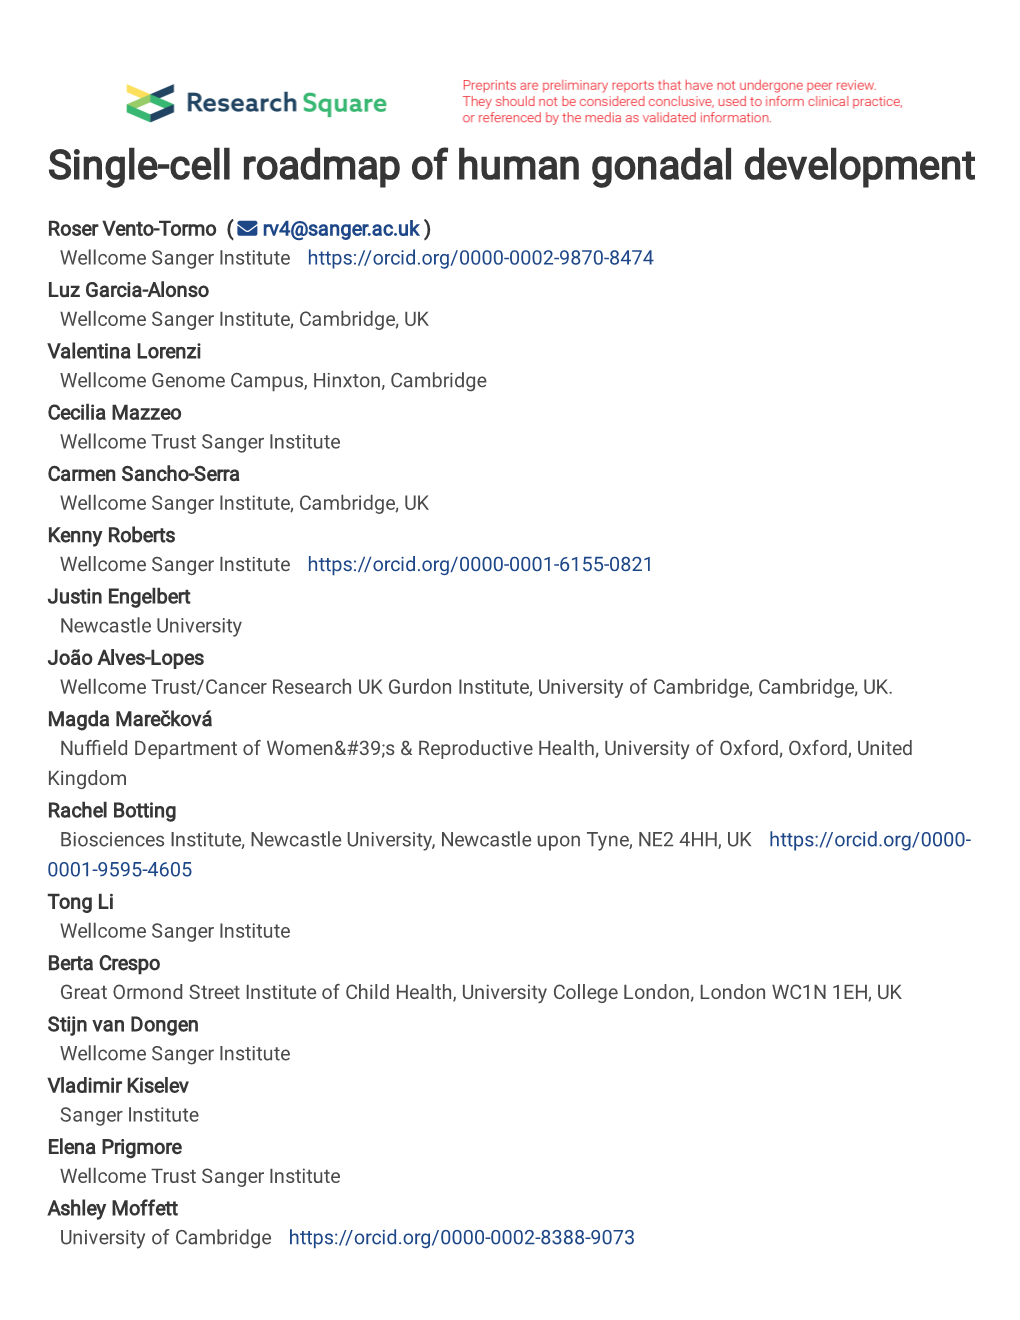 Single-Cell Roadmap of Human Gonadal Development